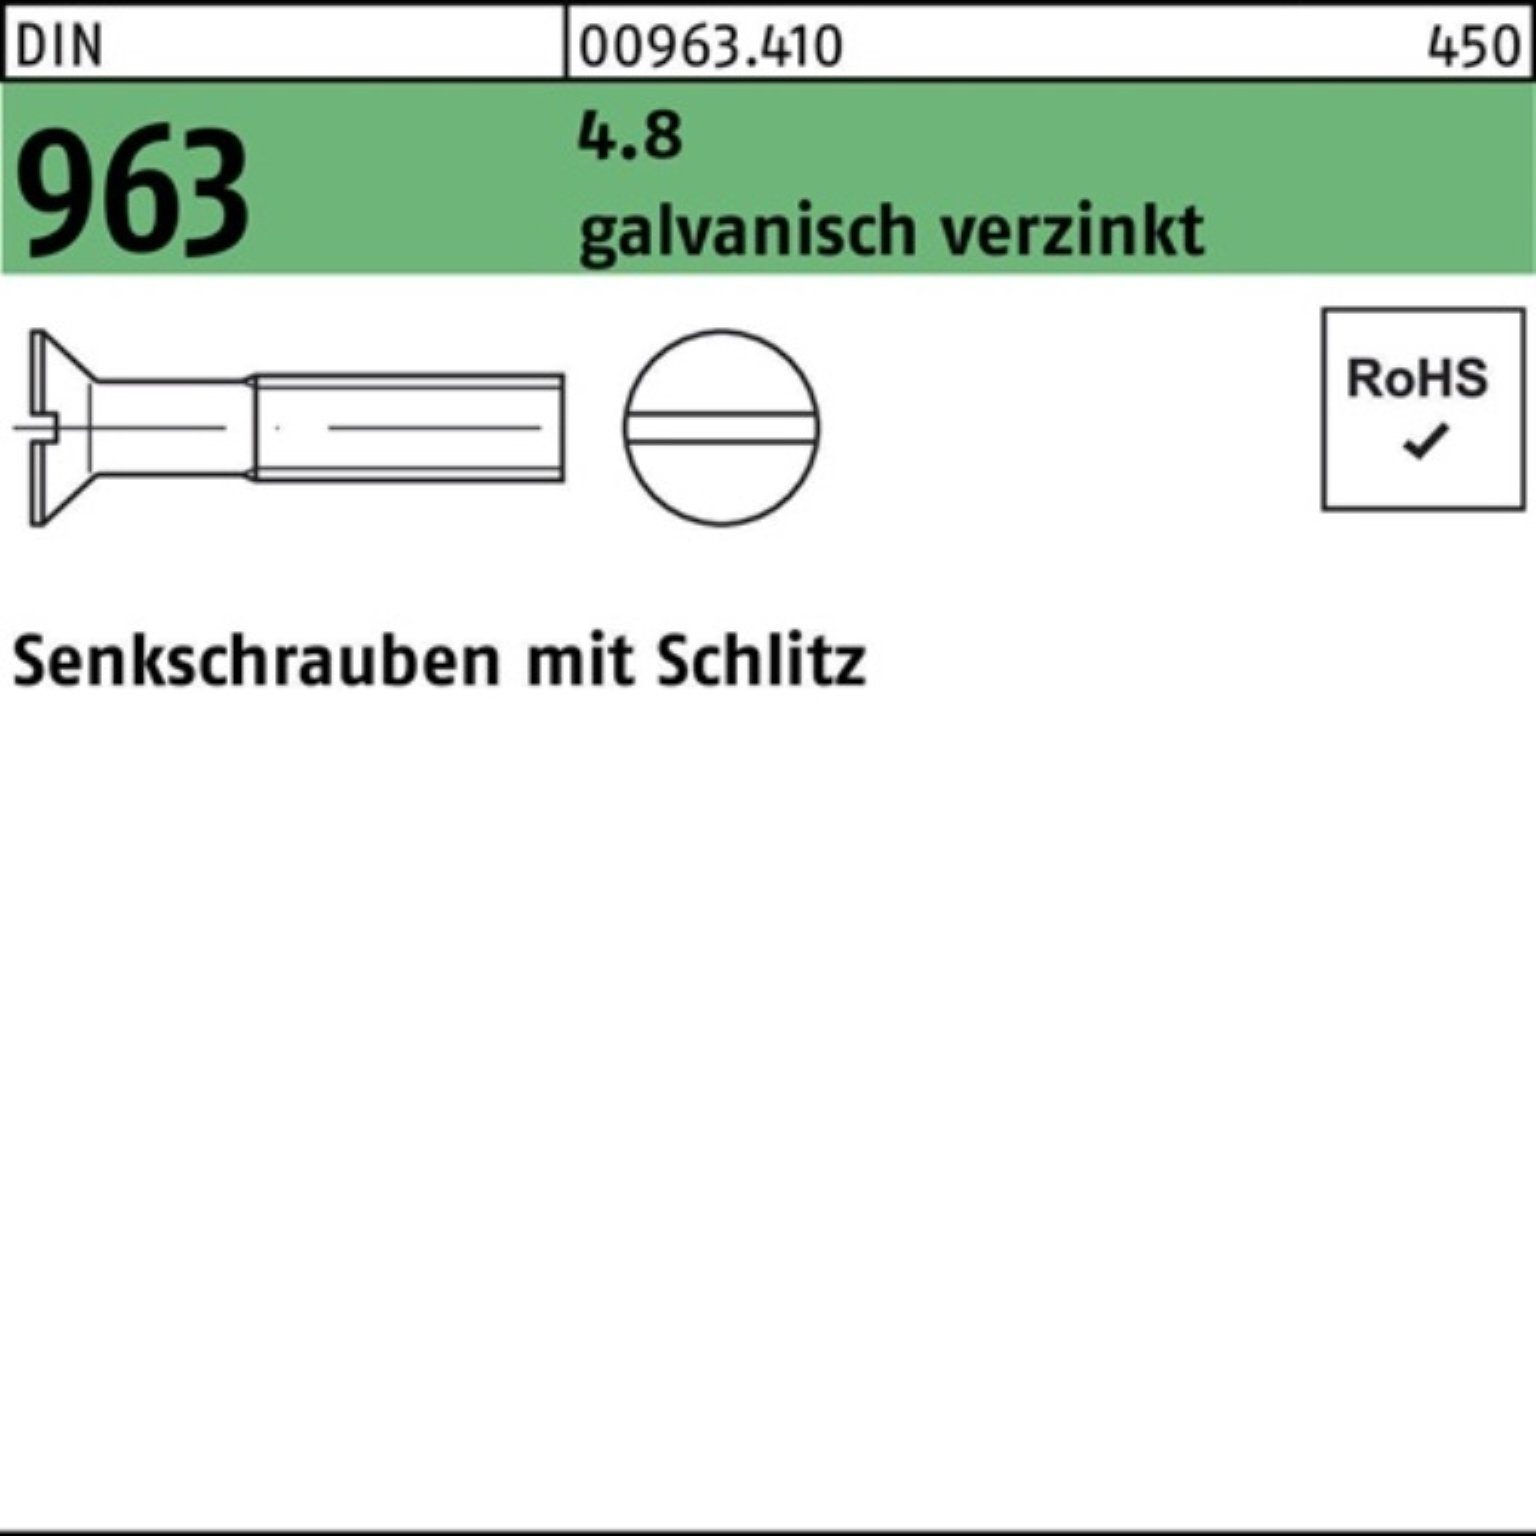 Pack DIN 200 Senkschraube Schlitz 4.8 40 Senkschraube galv.verz. Stü 963 M3x Reyher 200er